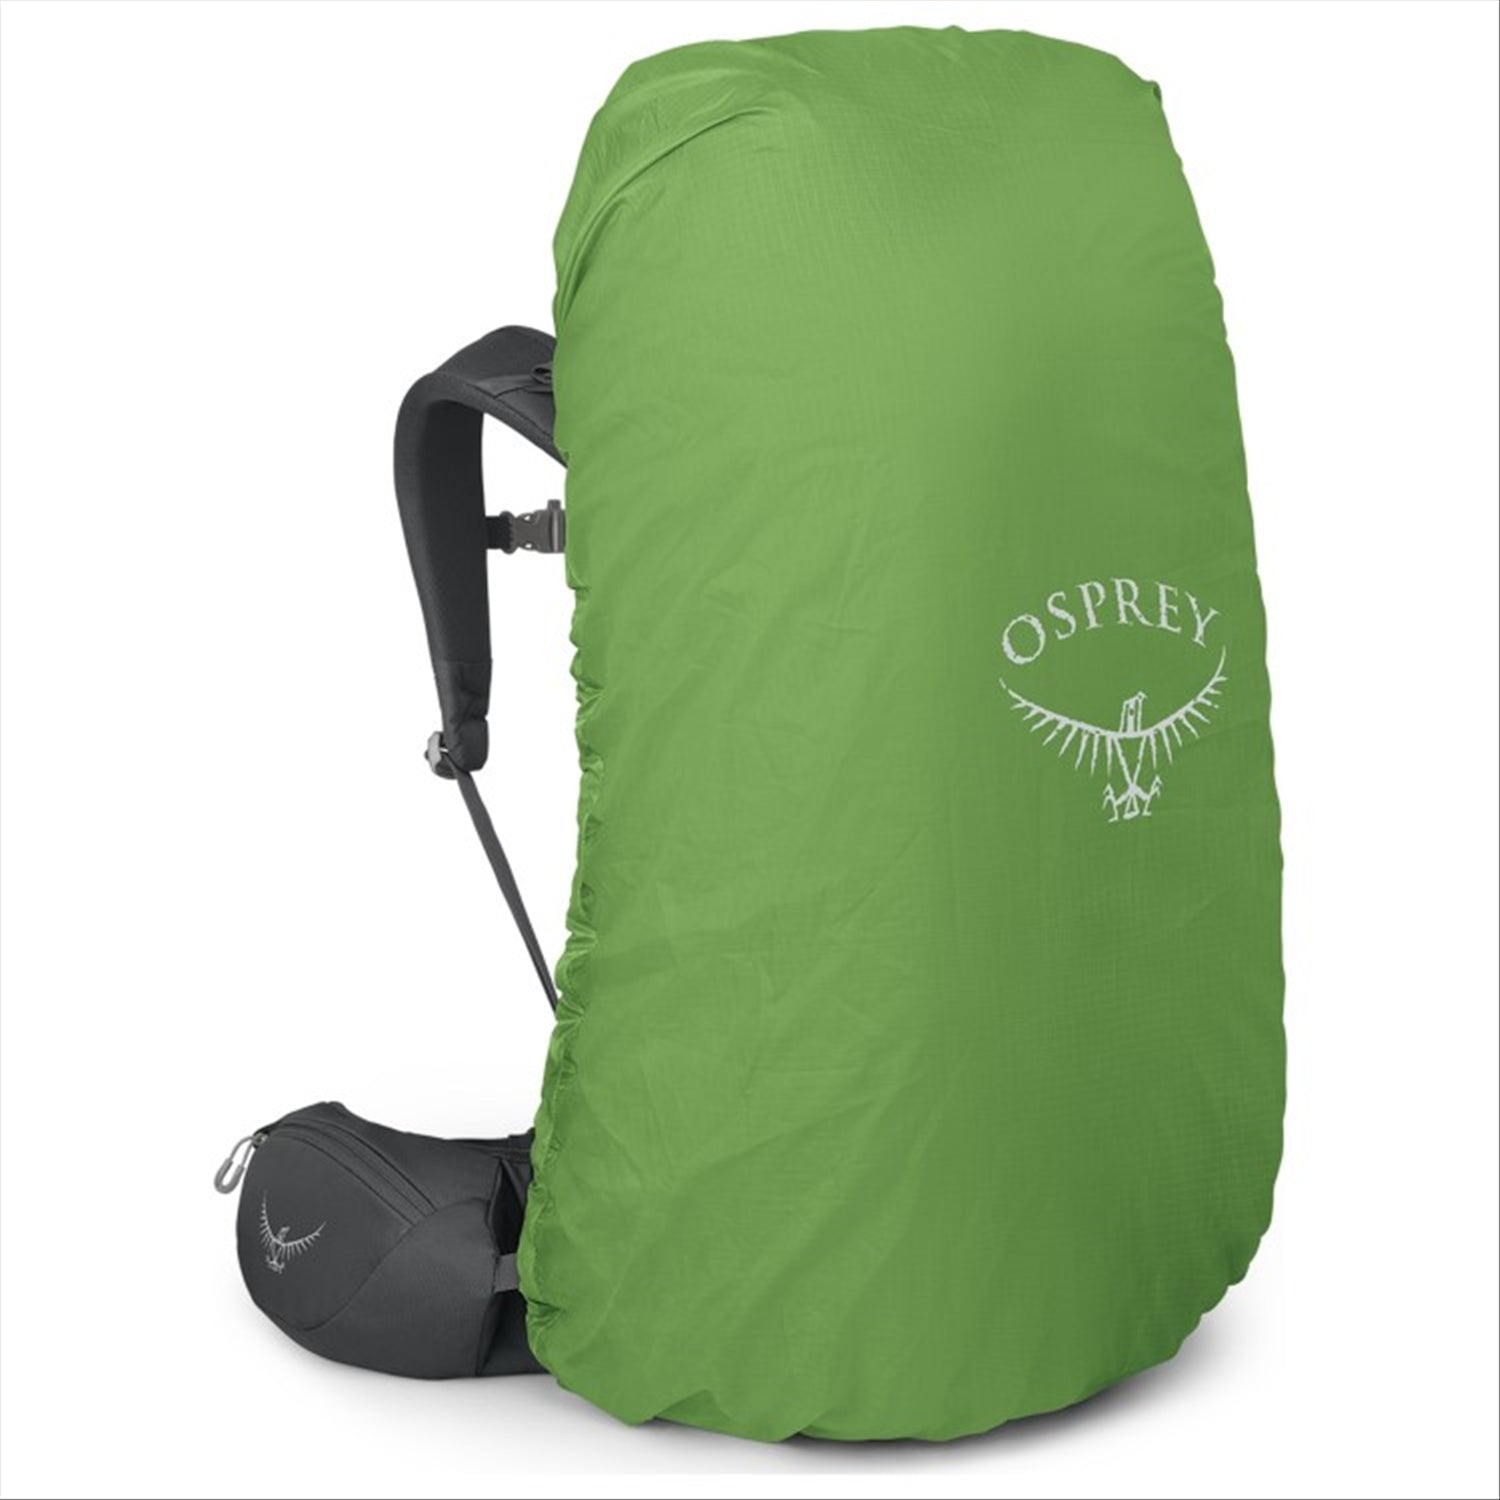 Osprey Osprey Viva 65 EF Extended Fit Women's Tramping Backpack 